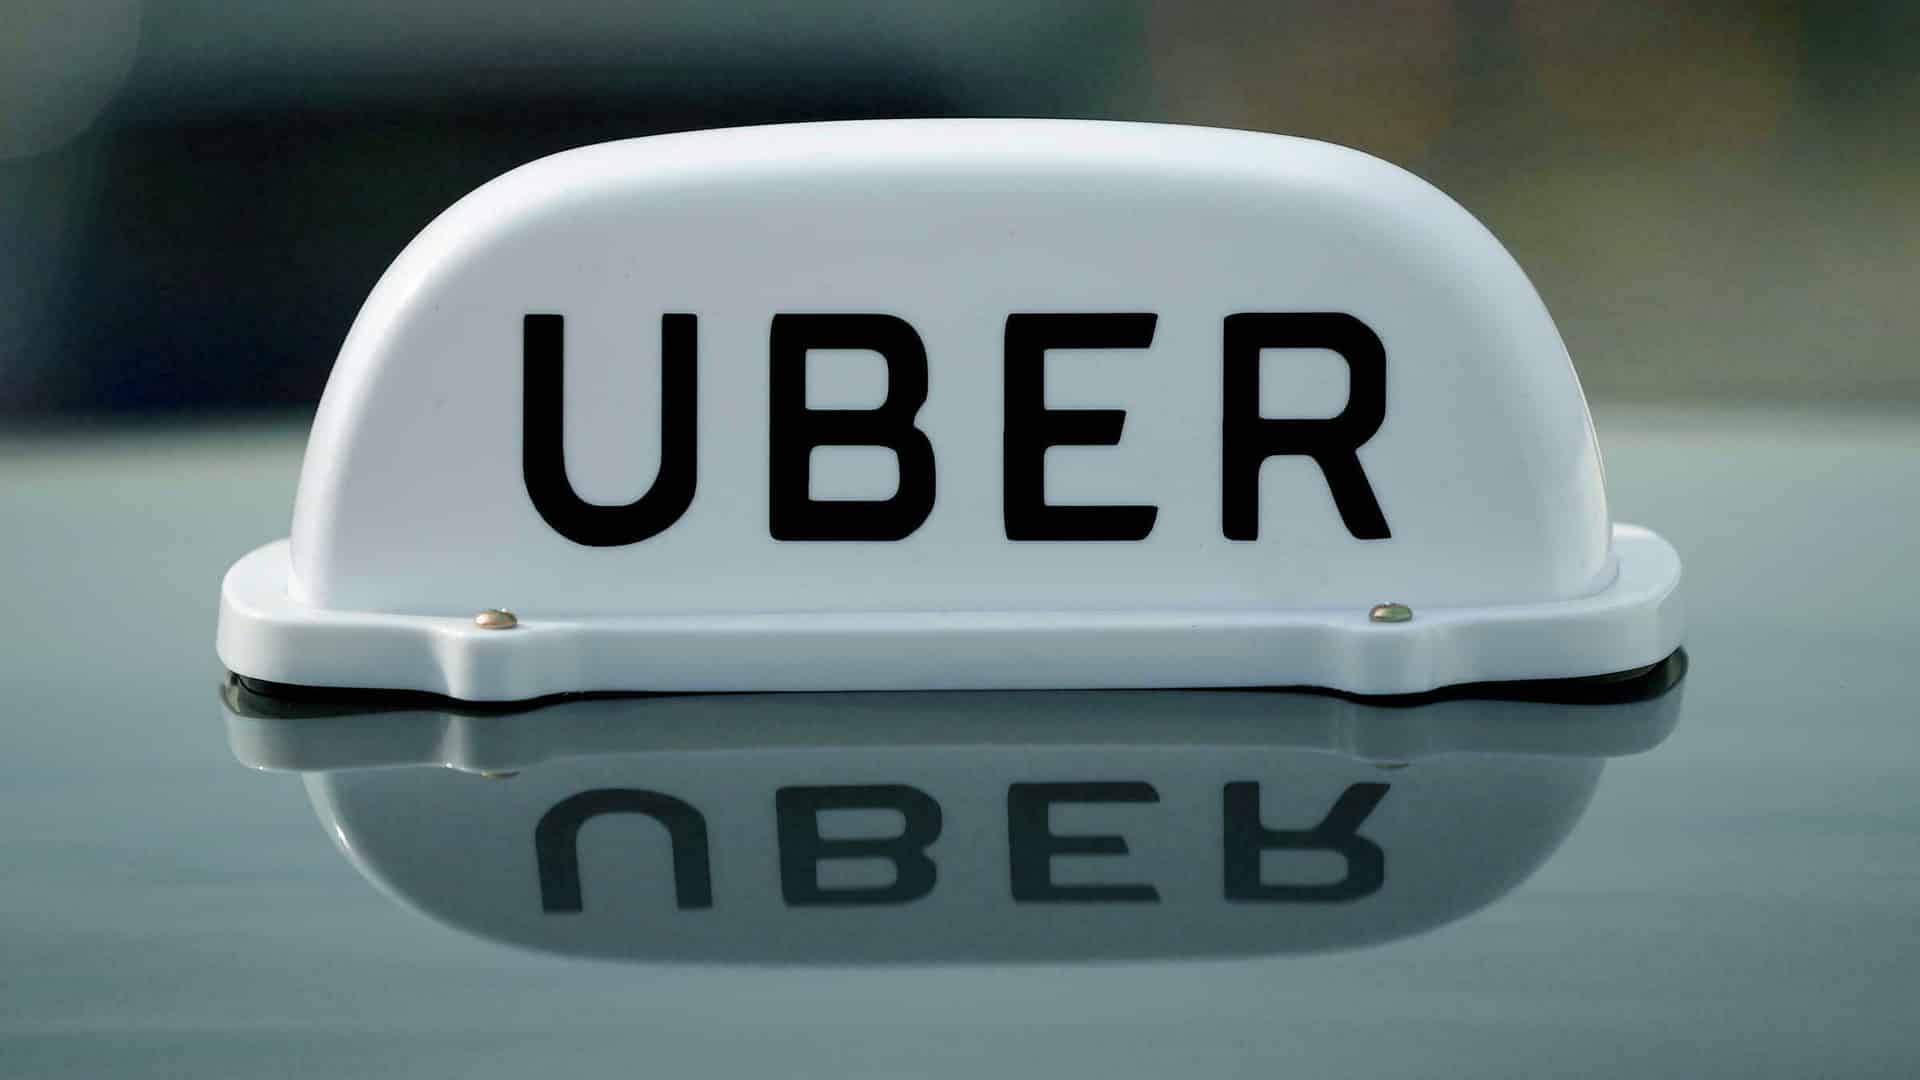 Uber names Nitish Bhushan as Central Ops Director for India, Bangladesh, Sri Lanka